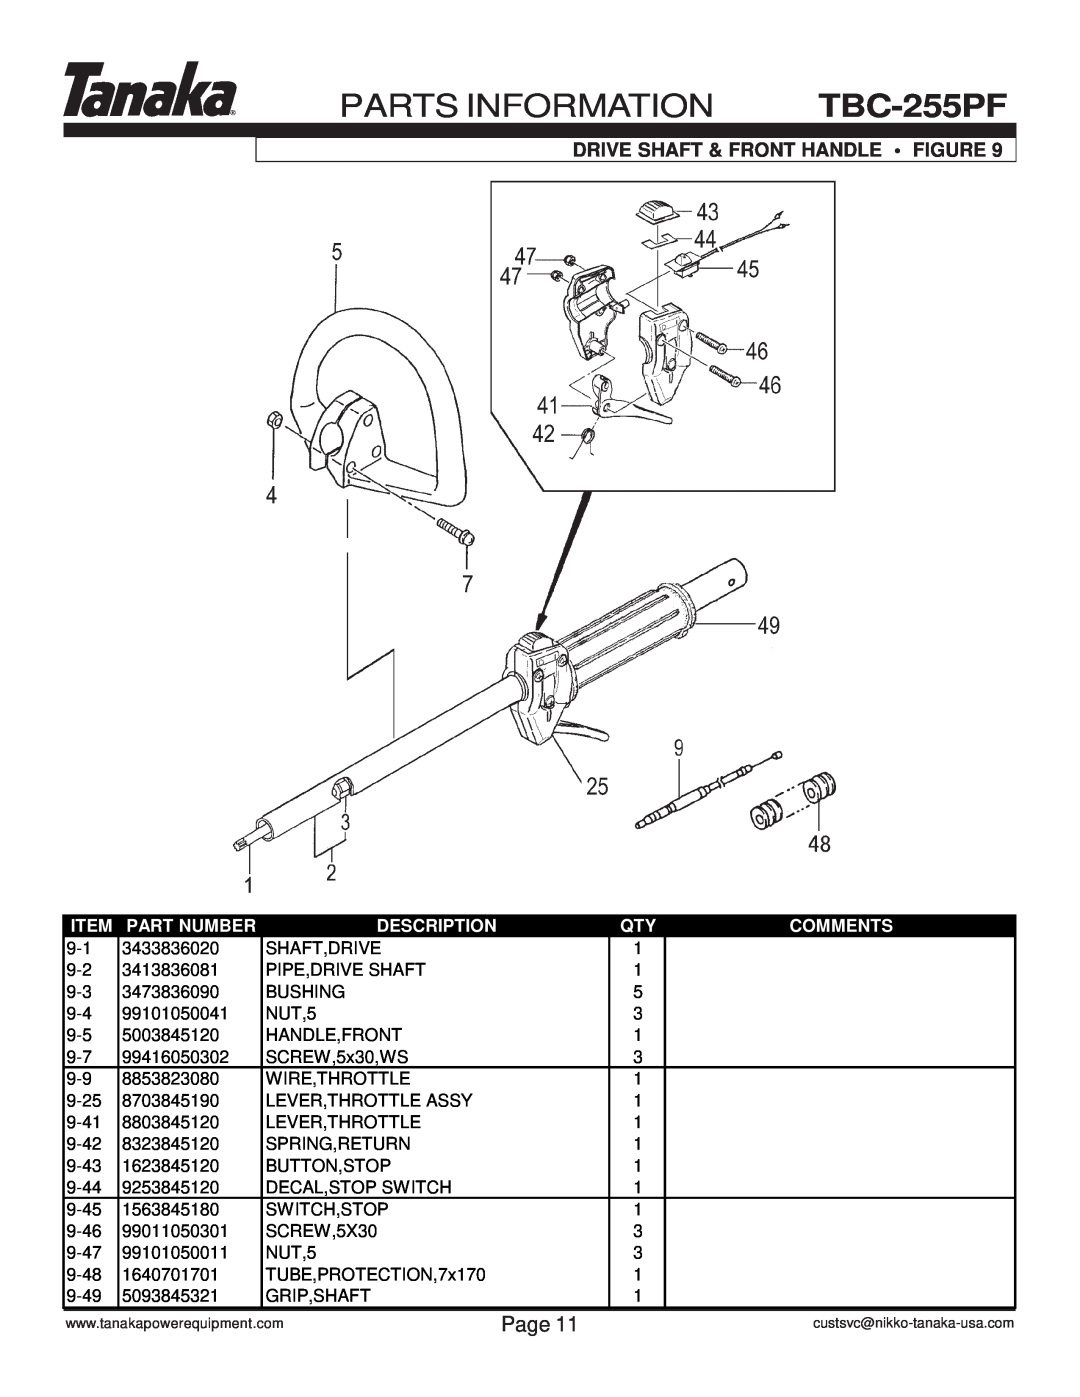 Tanaka manual Drive Shaft & Front Handle Figure, PARTS INFORMATION TBC-255PF, Page, Part Number, Description, Comments 